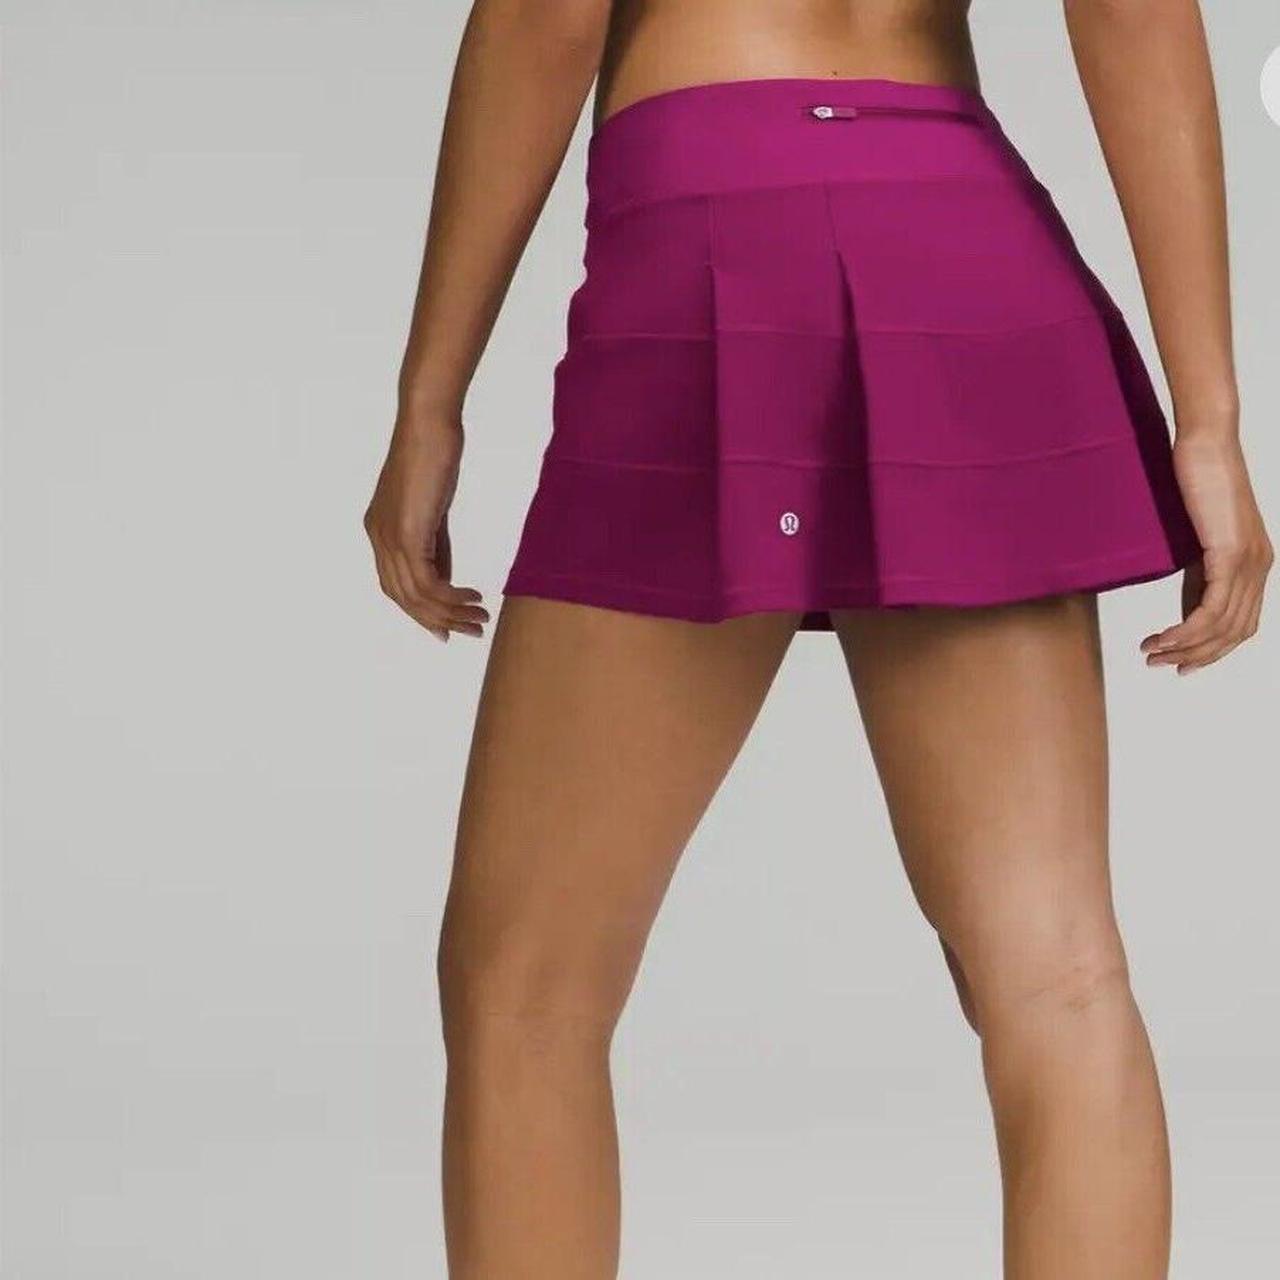 lululemon swiftly tech high-rise skirt dupe size xs - Depop